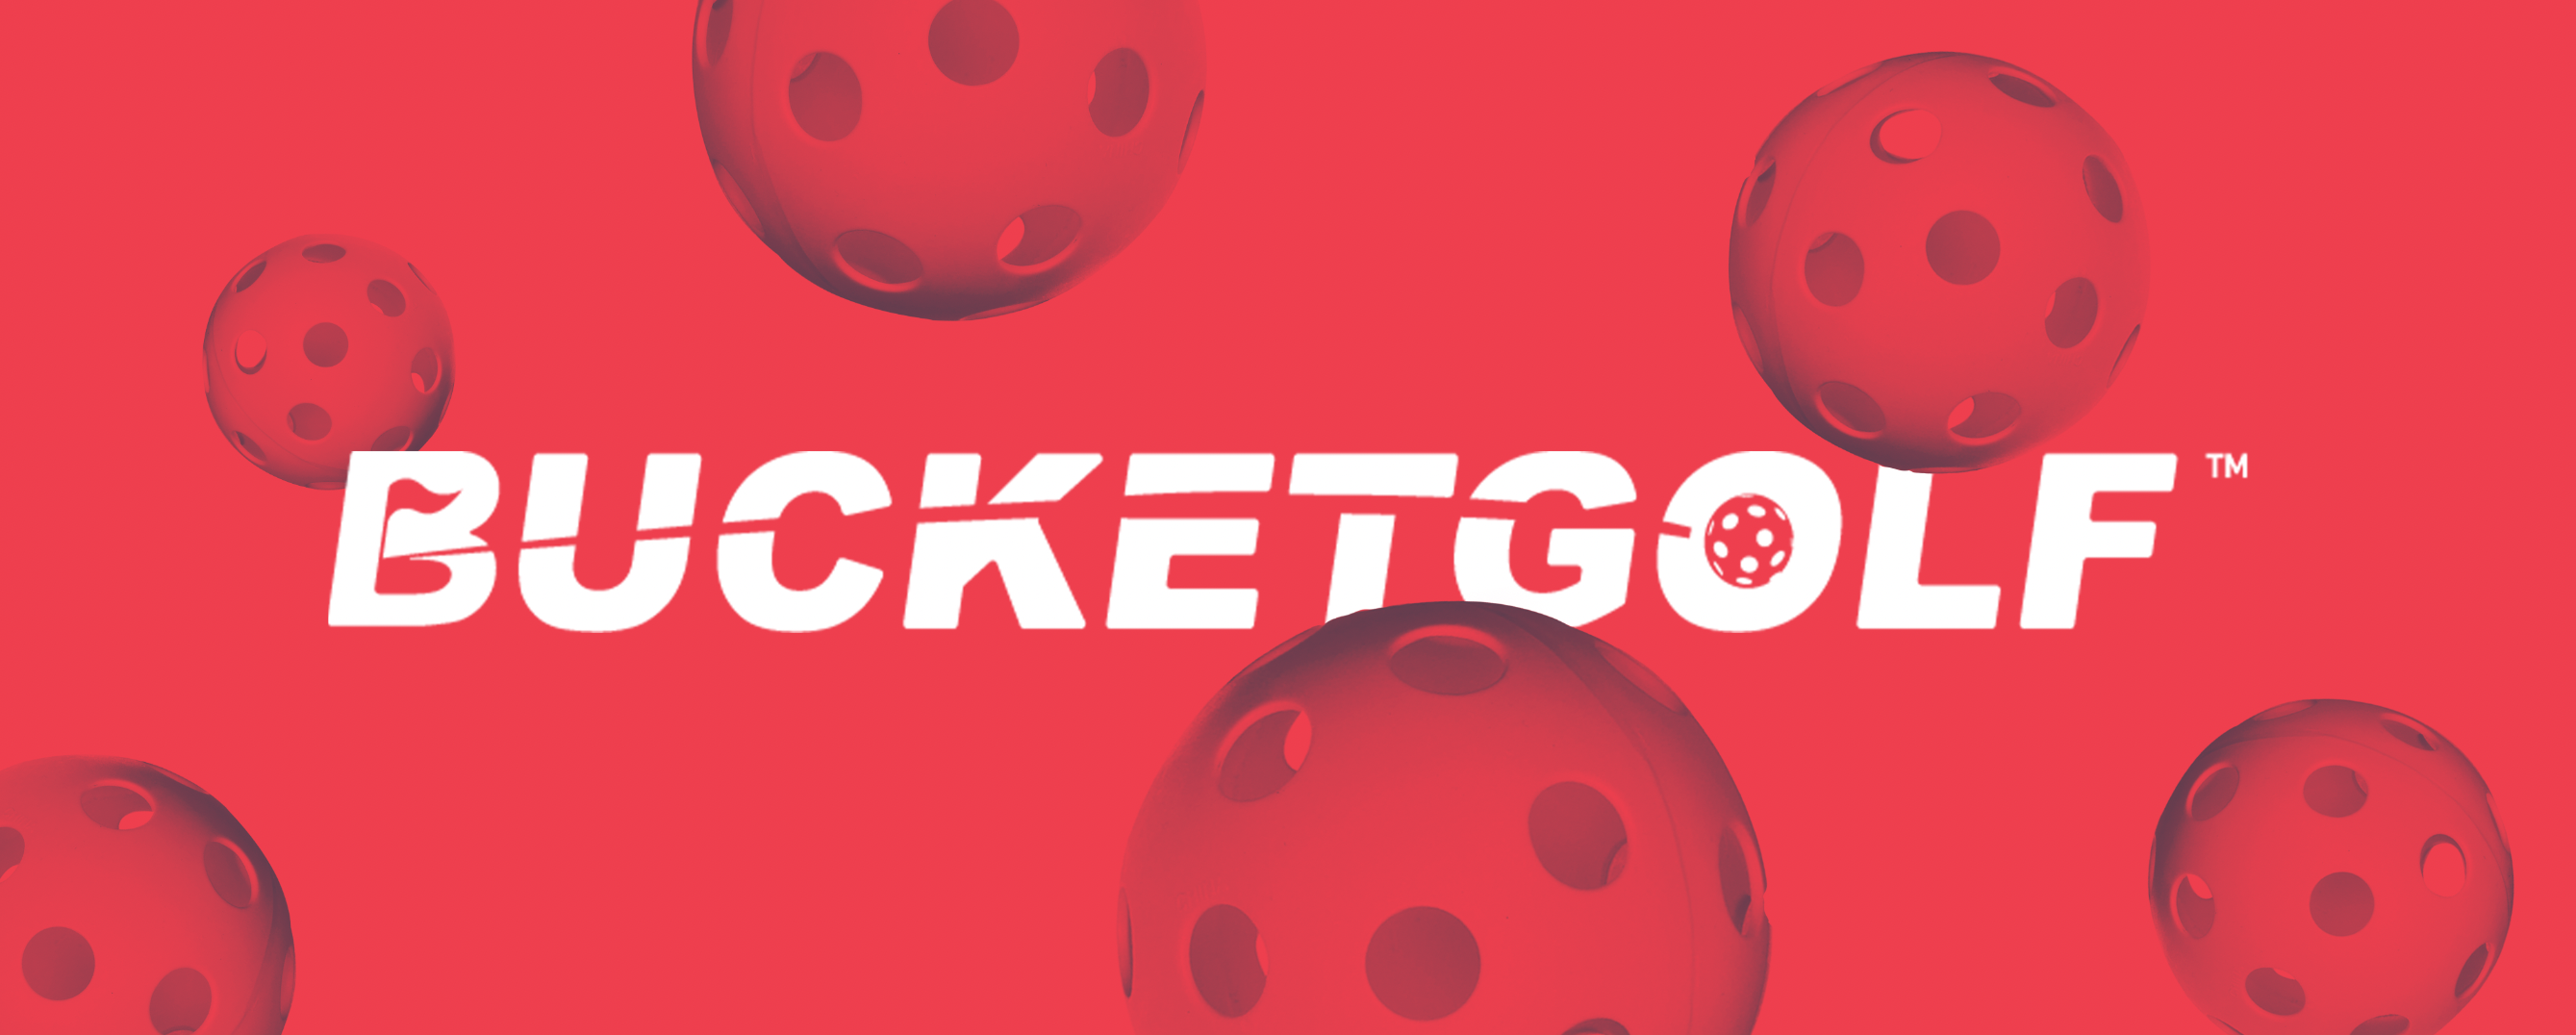 Bucketgolf Logo